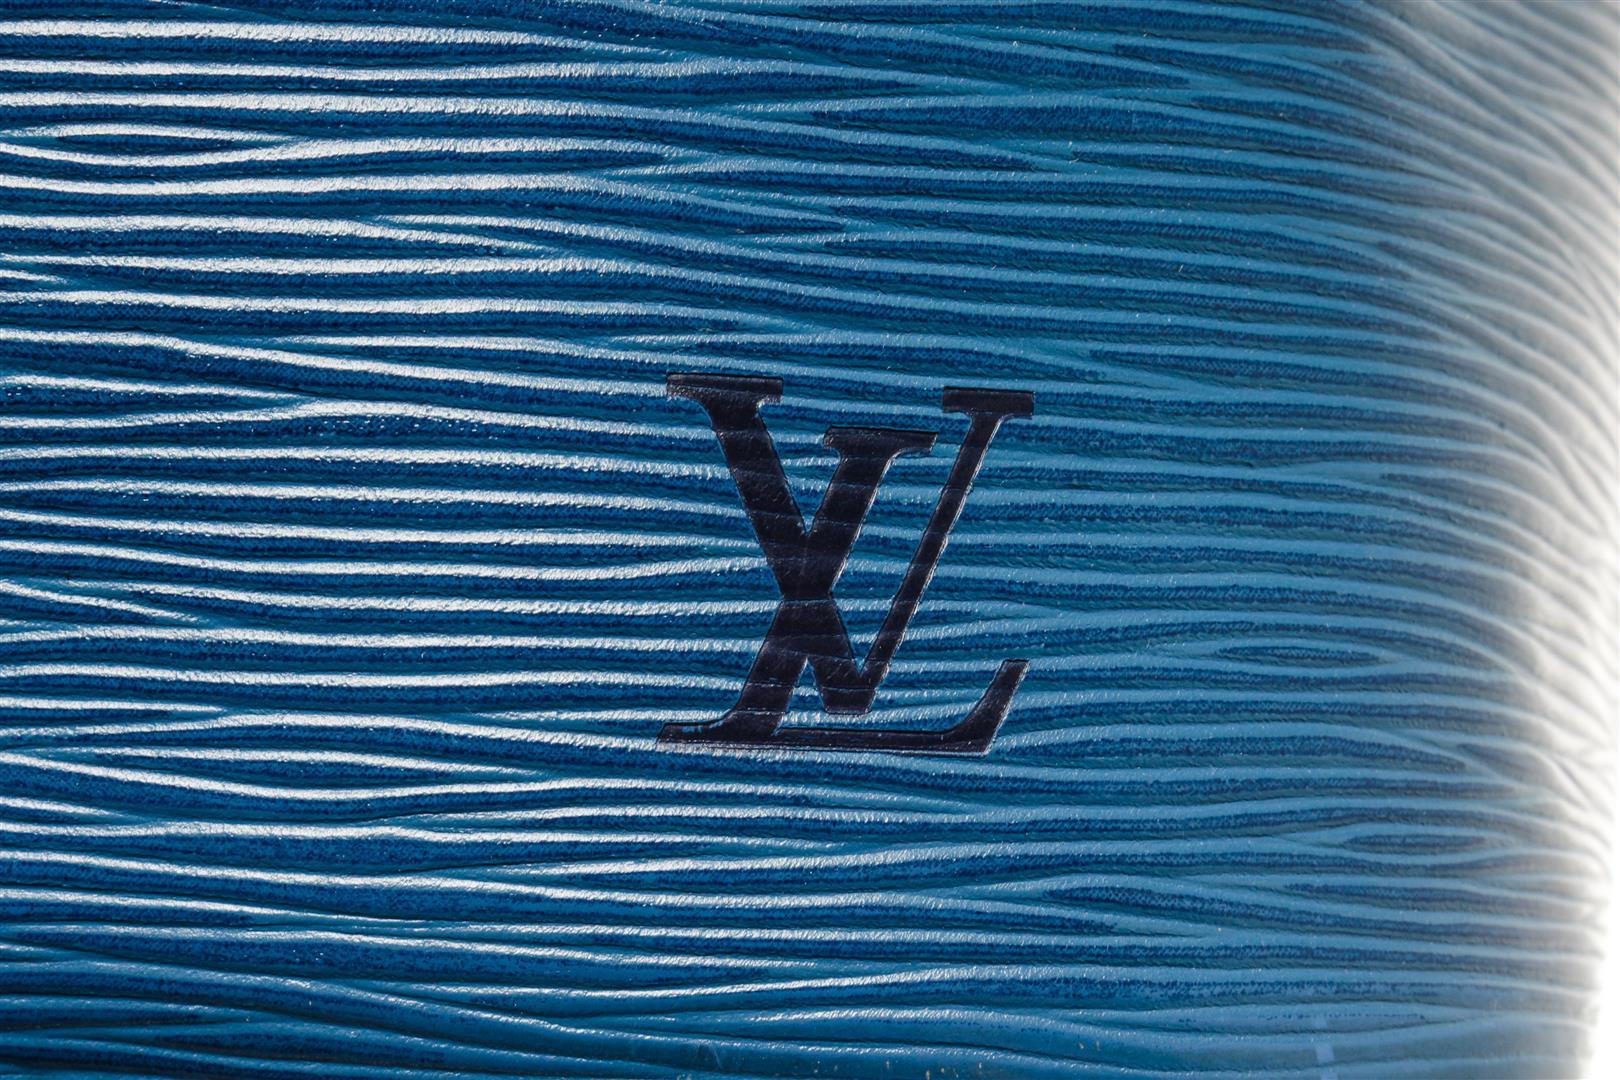 Louis Vuitton Blue Epi Leather Noe PM